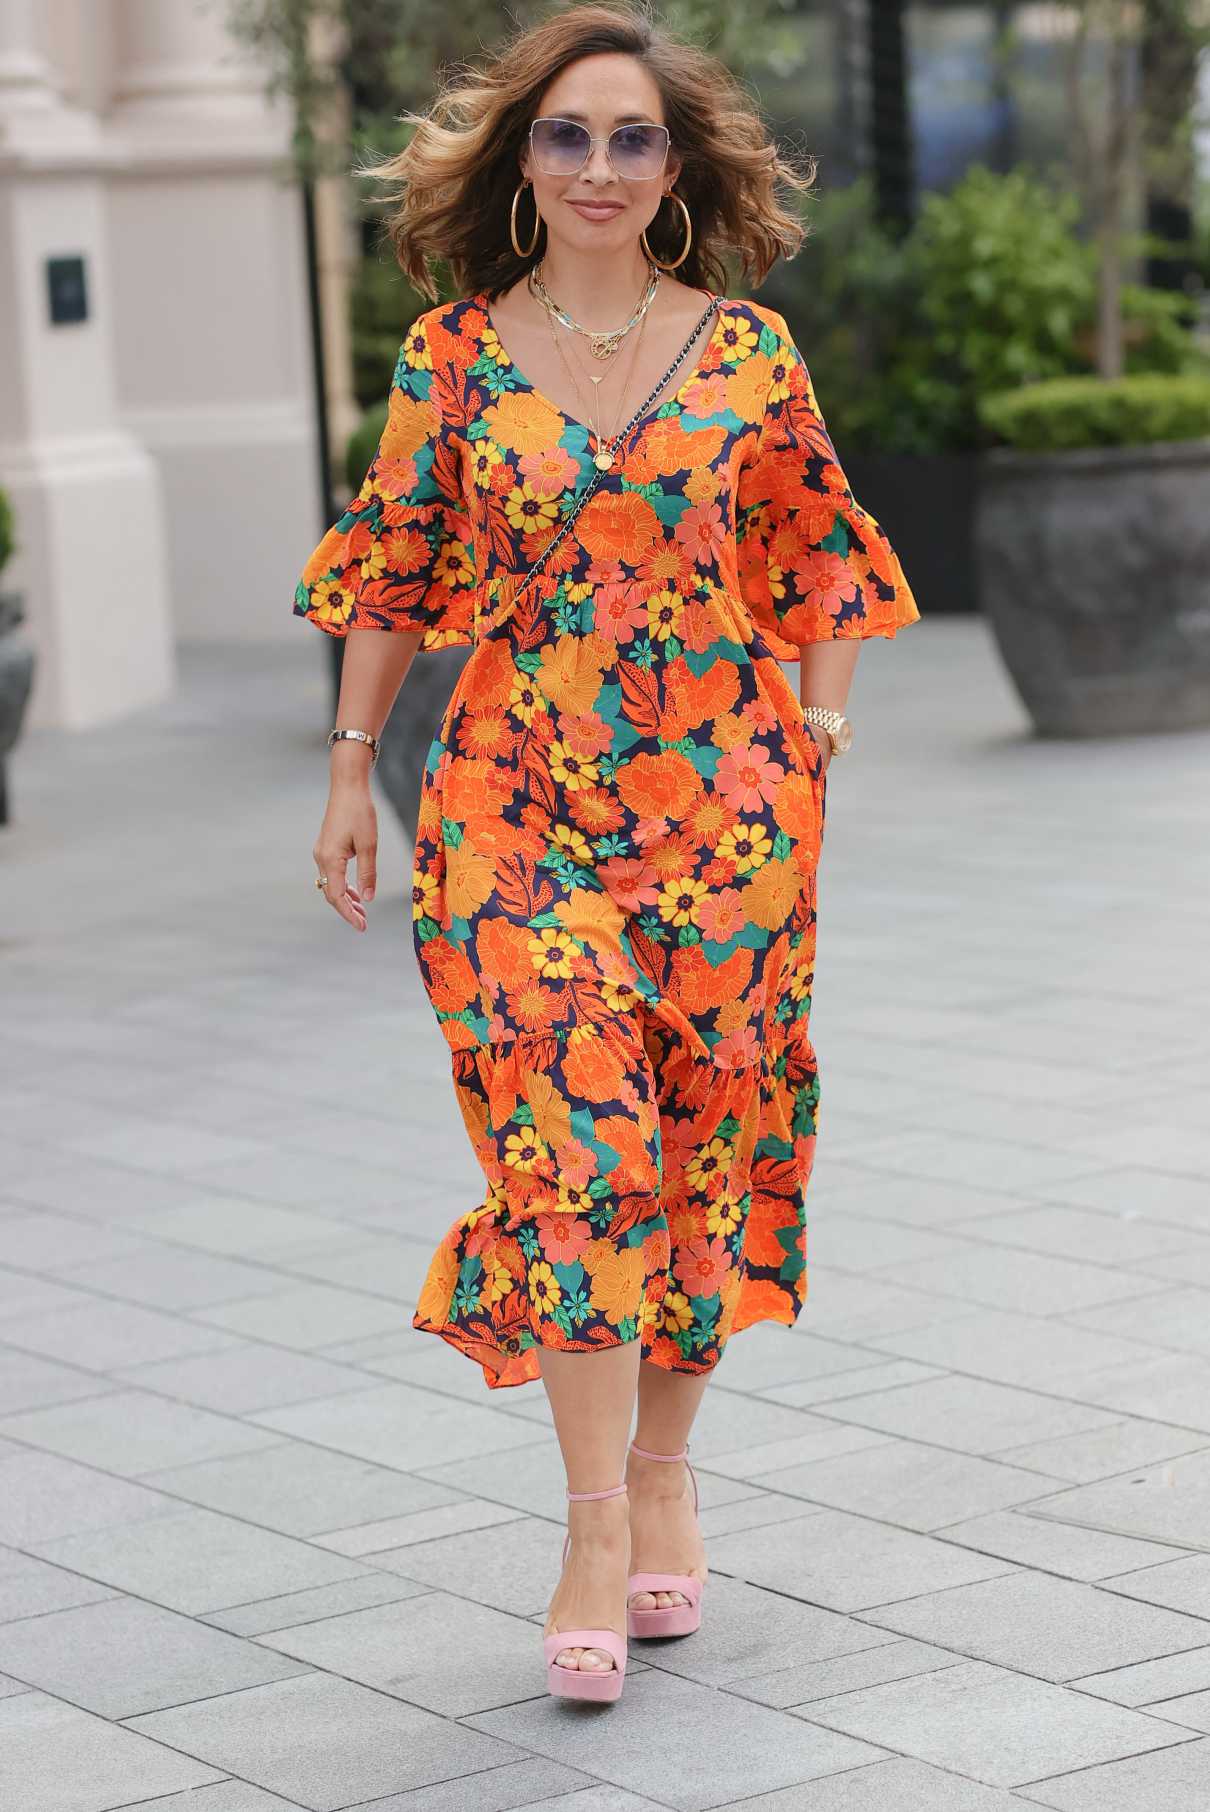 Myleene Klass in an Orange Floral Dress